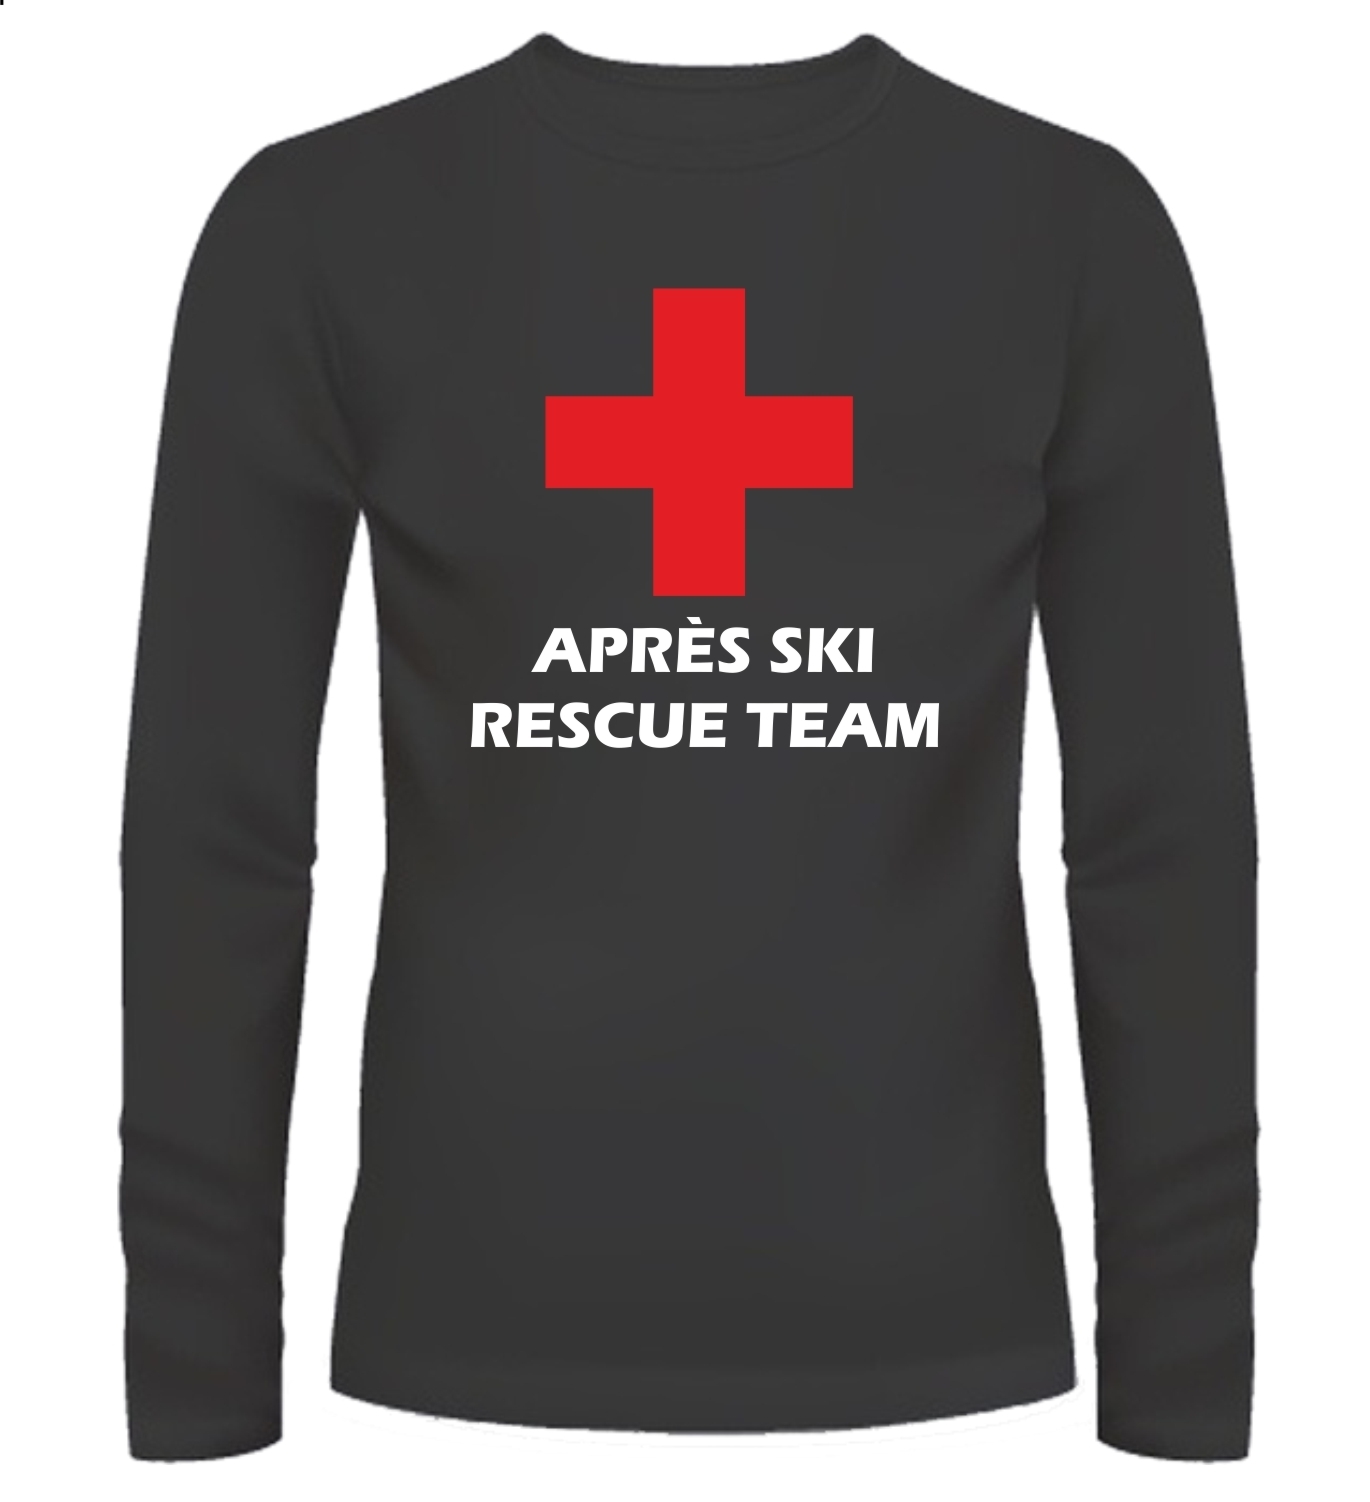 Apres ski rescue team t-shirt lange mouw 